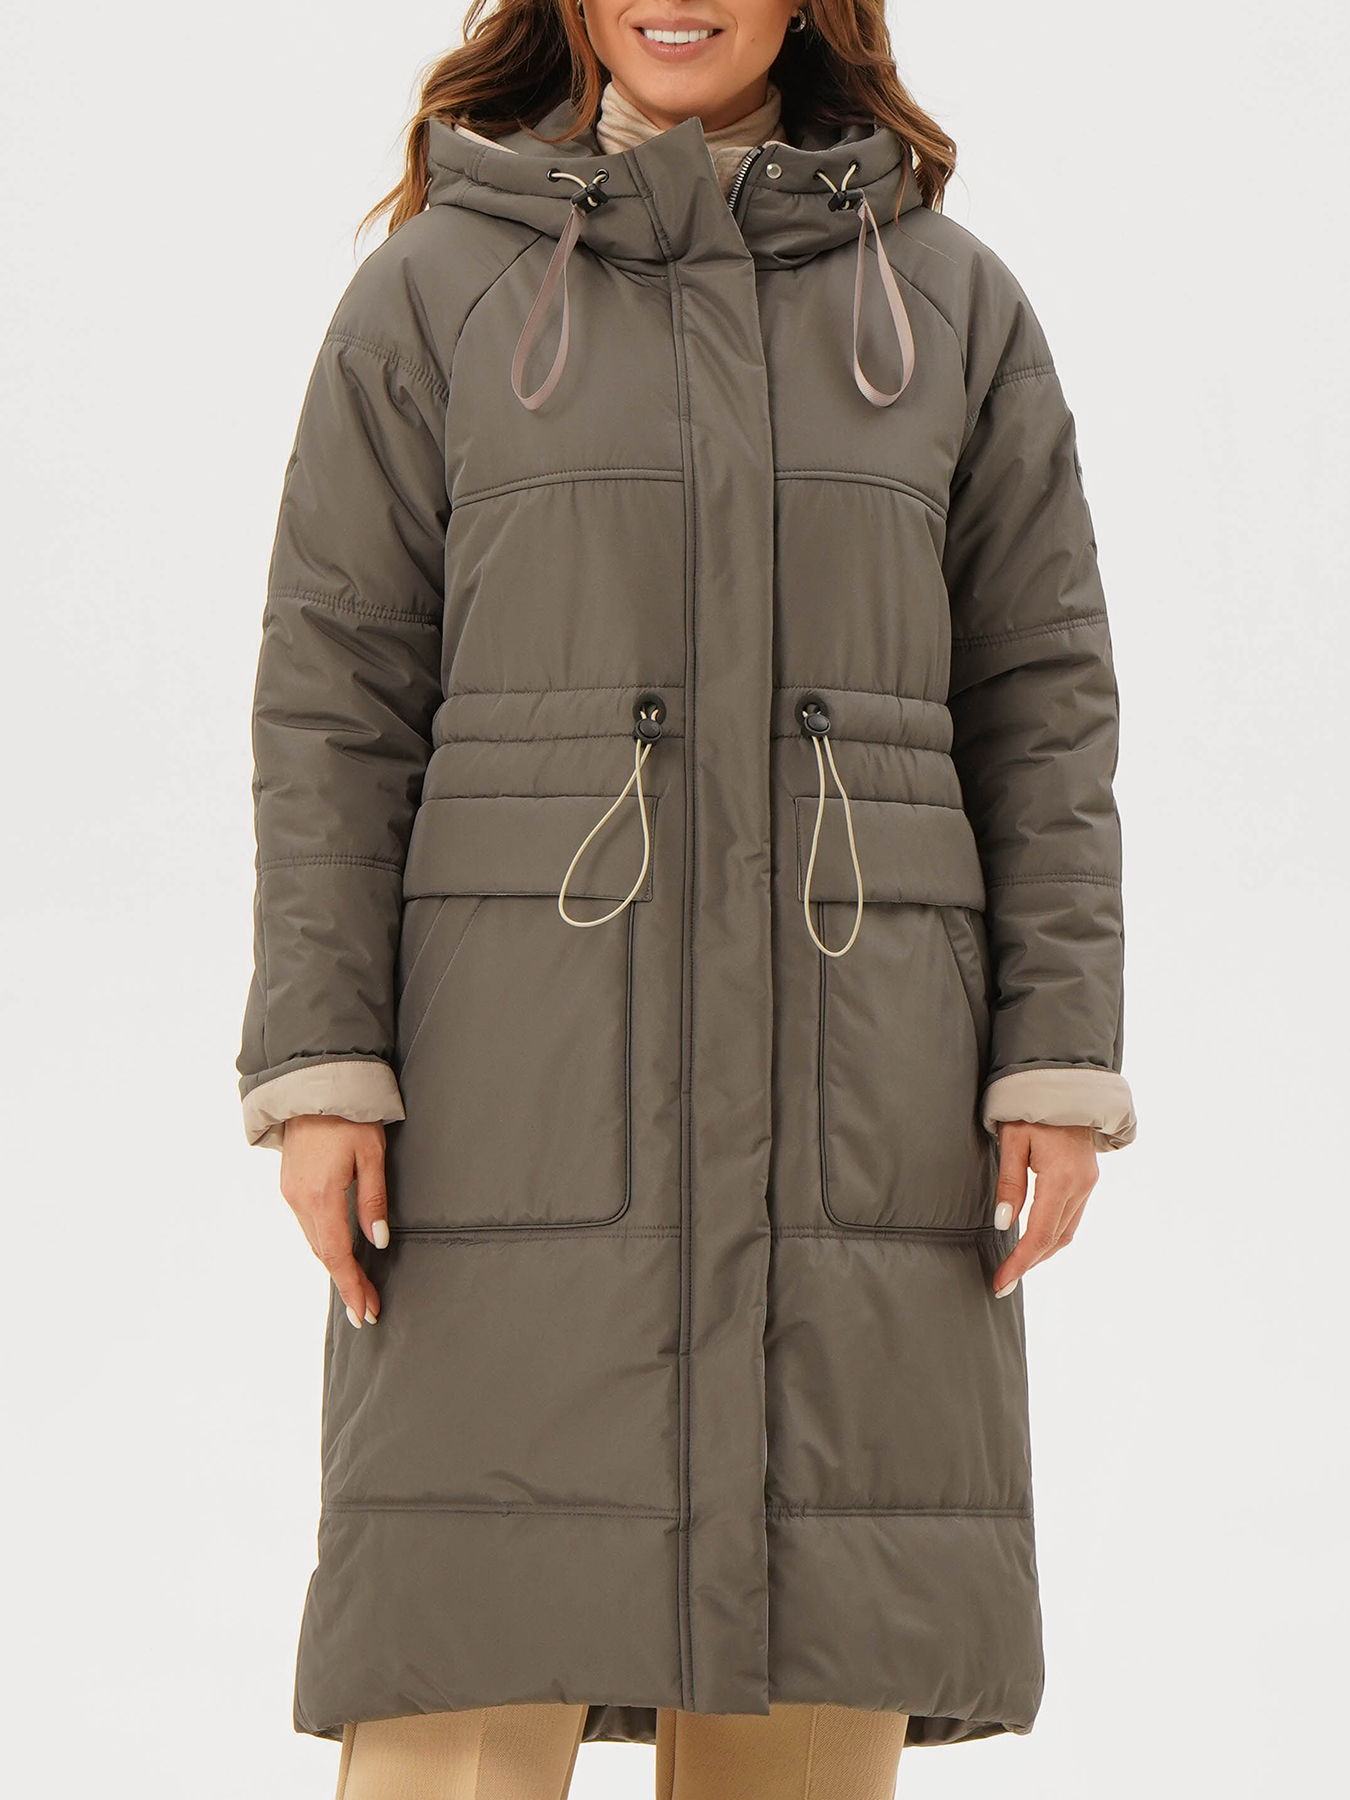 Пальто зимнее Maritta 433583-025, цвет хаки, размер 48 - фото 1